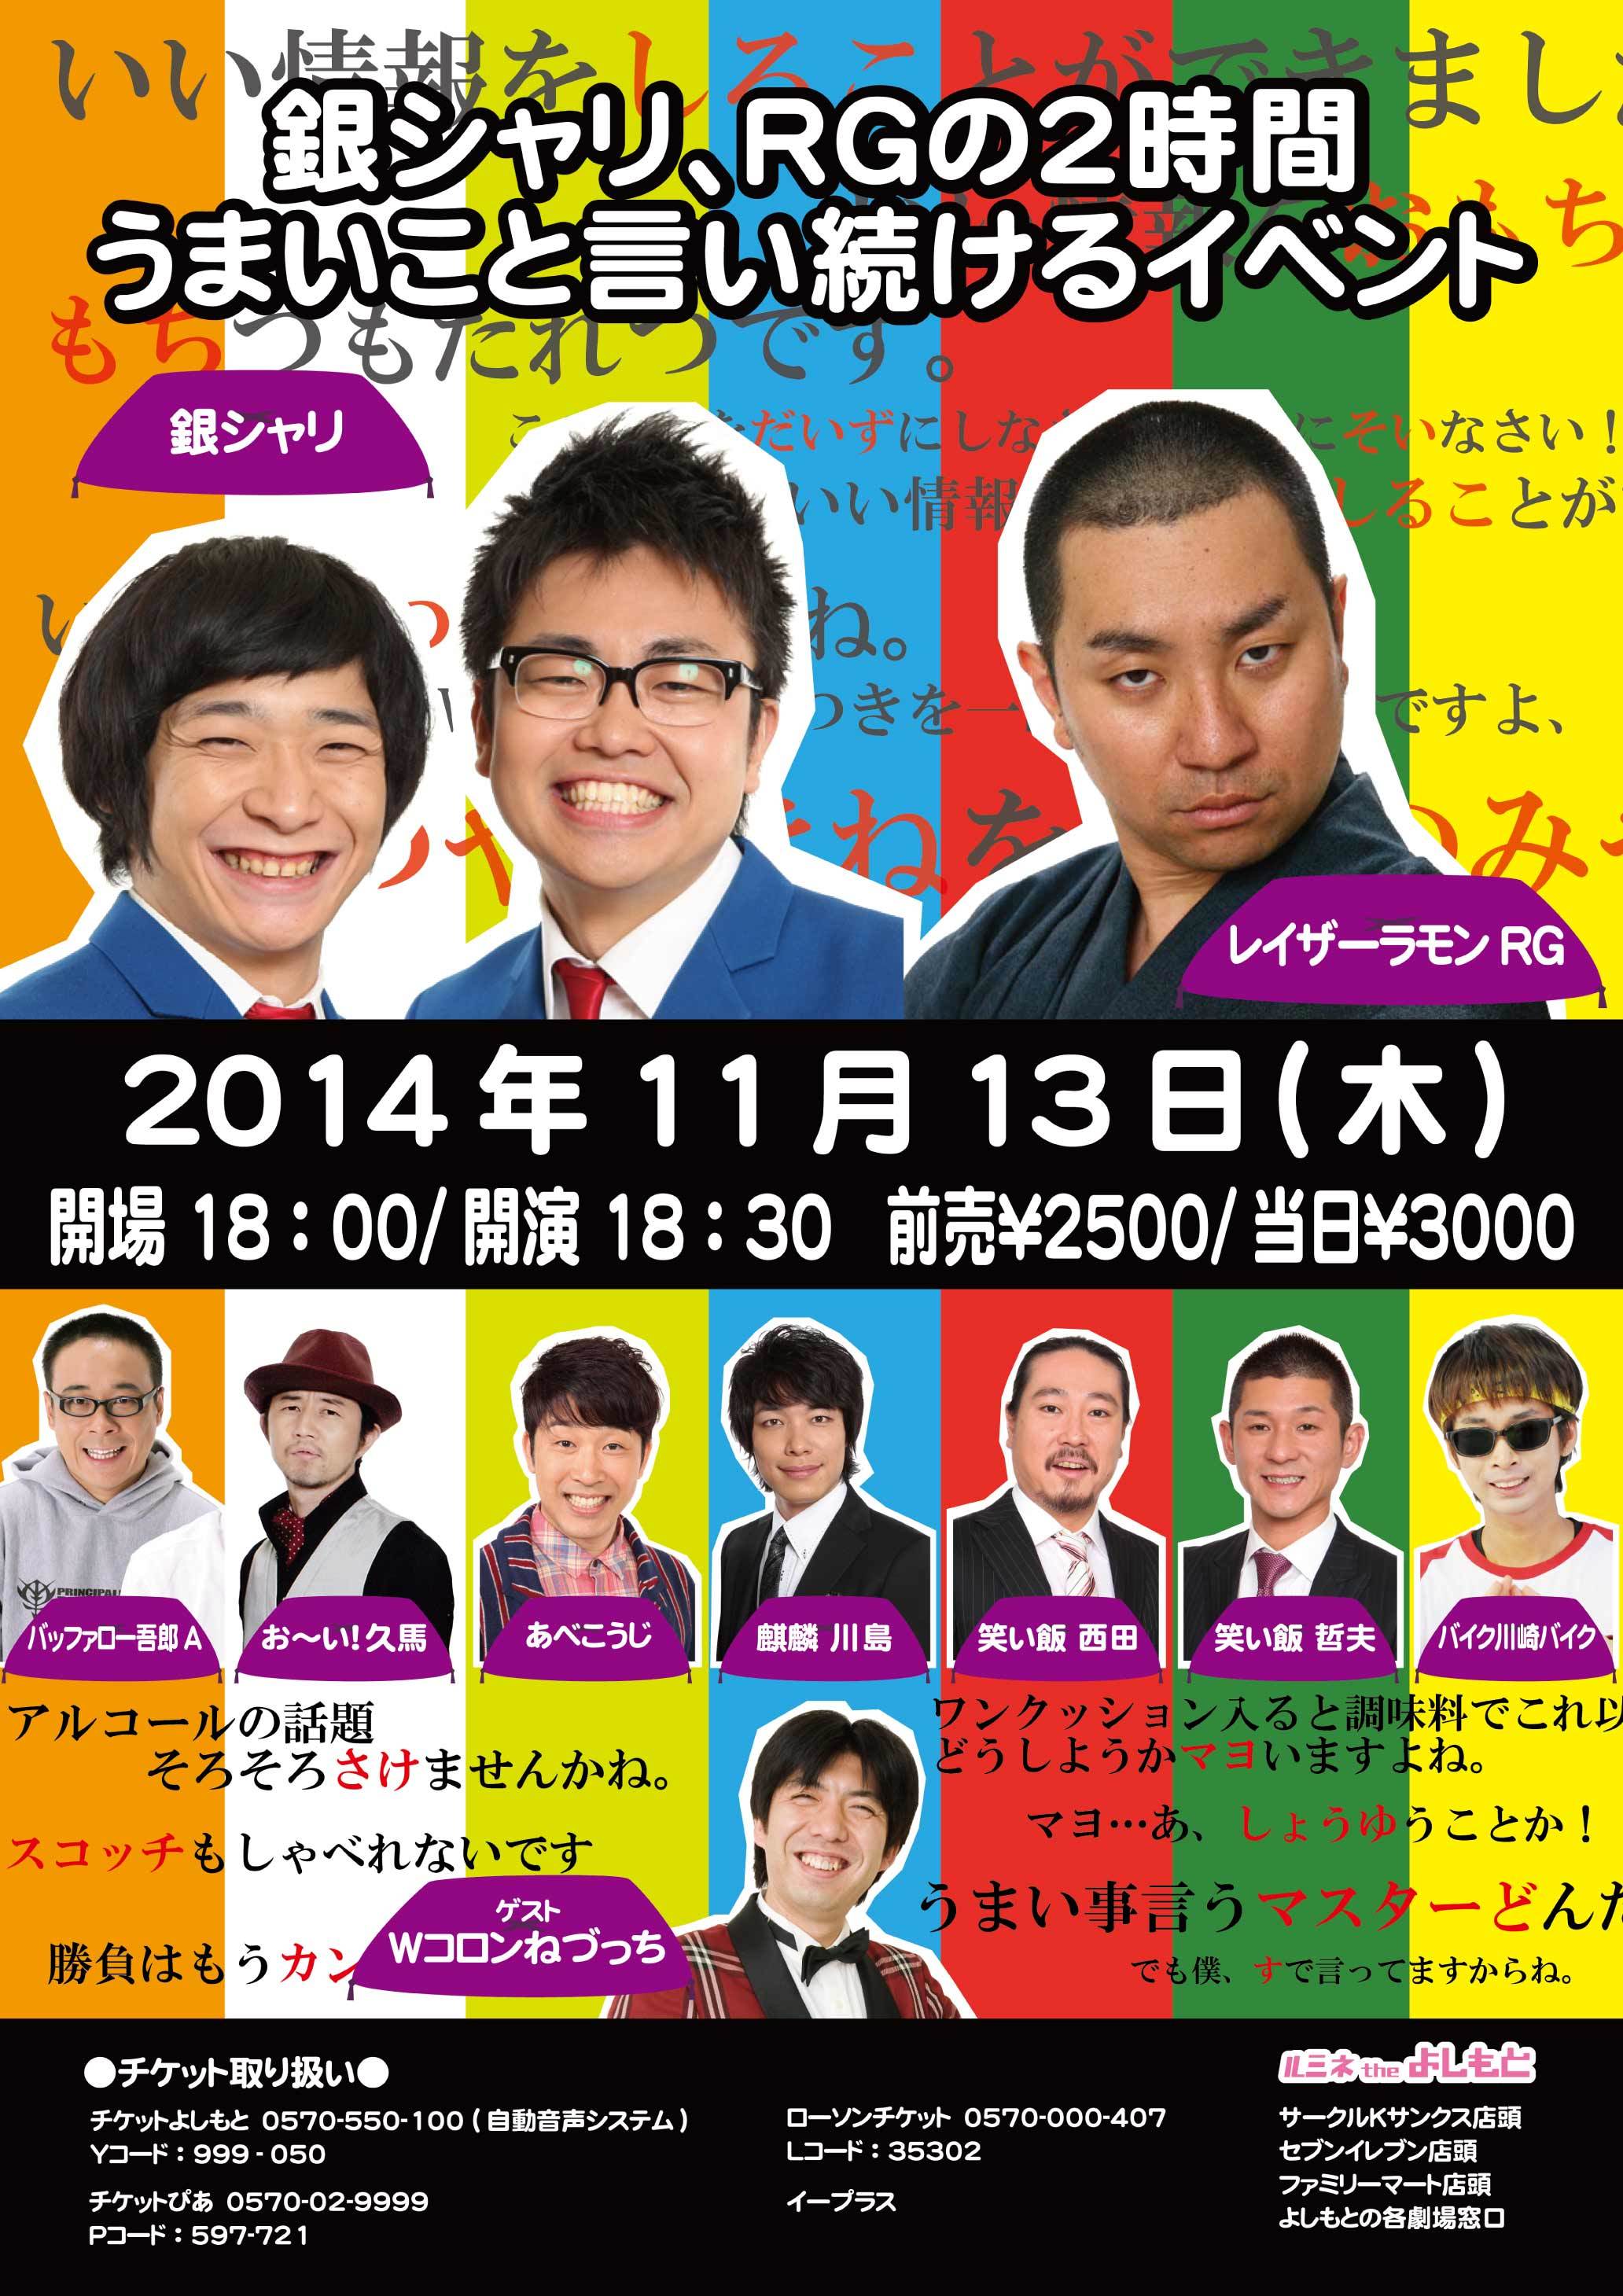 http://news.yoshimoto.co.jp/photos/uncategorized/2014/11/11/20141111101112-d4c748a7086acd3f14ad54b51c5f895c5f96e843.jpg